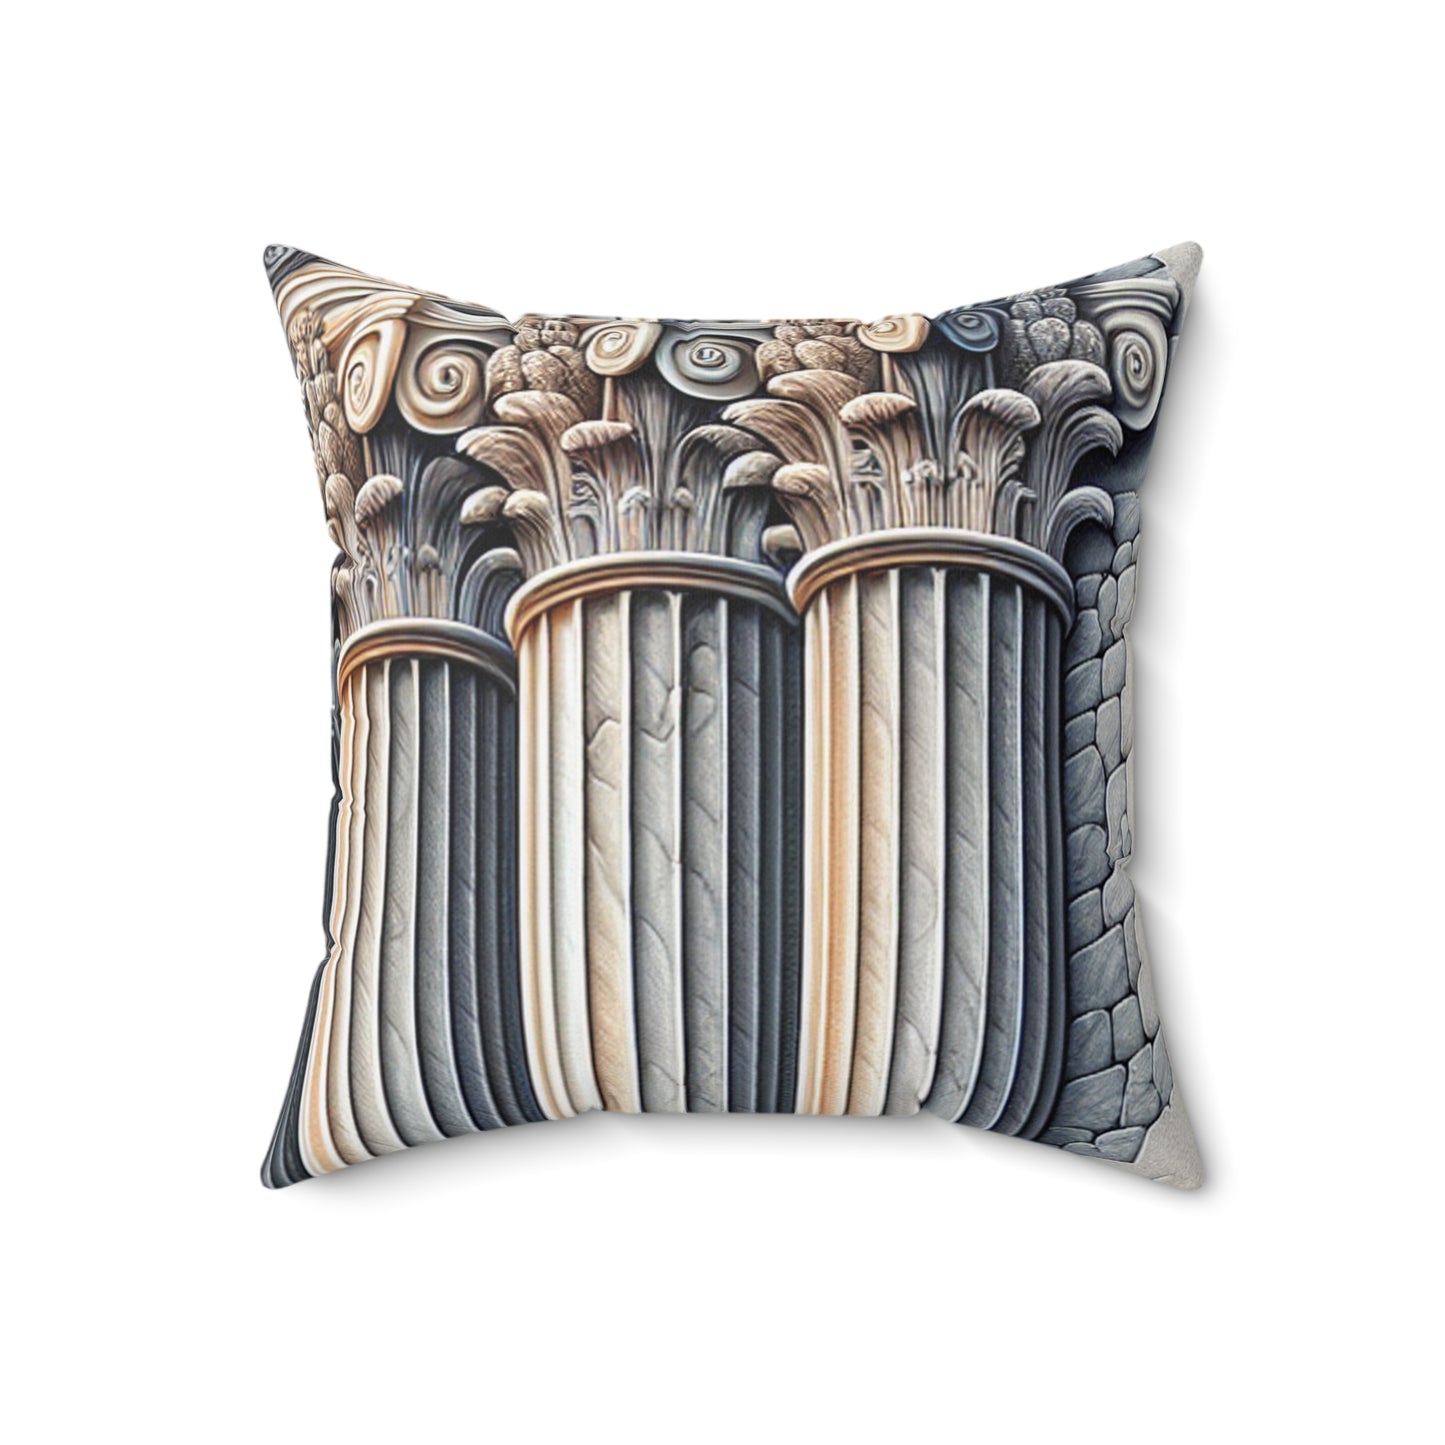 "3D Wall Columns: An Architectural Artpiece" - The Alien Spun Polyester Square Pillow Trompe-l'oeil Style